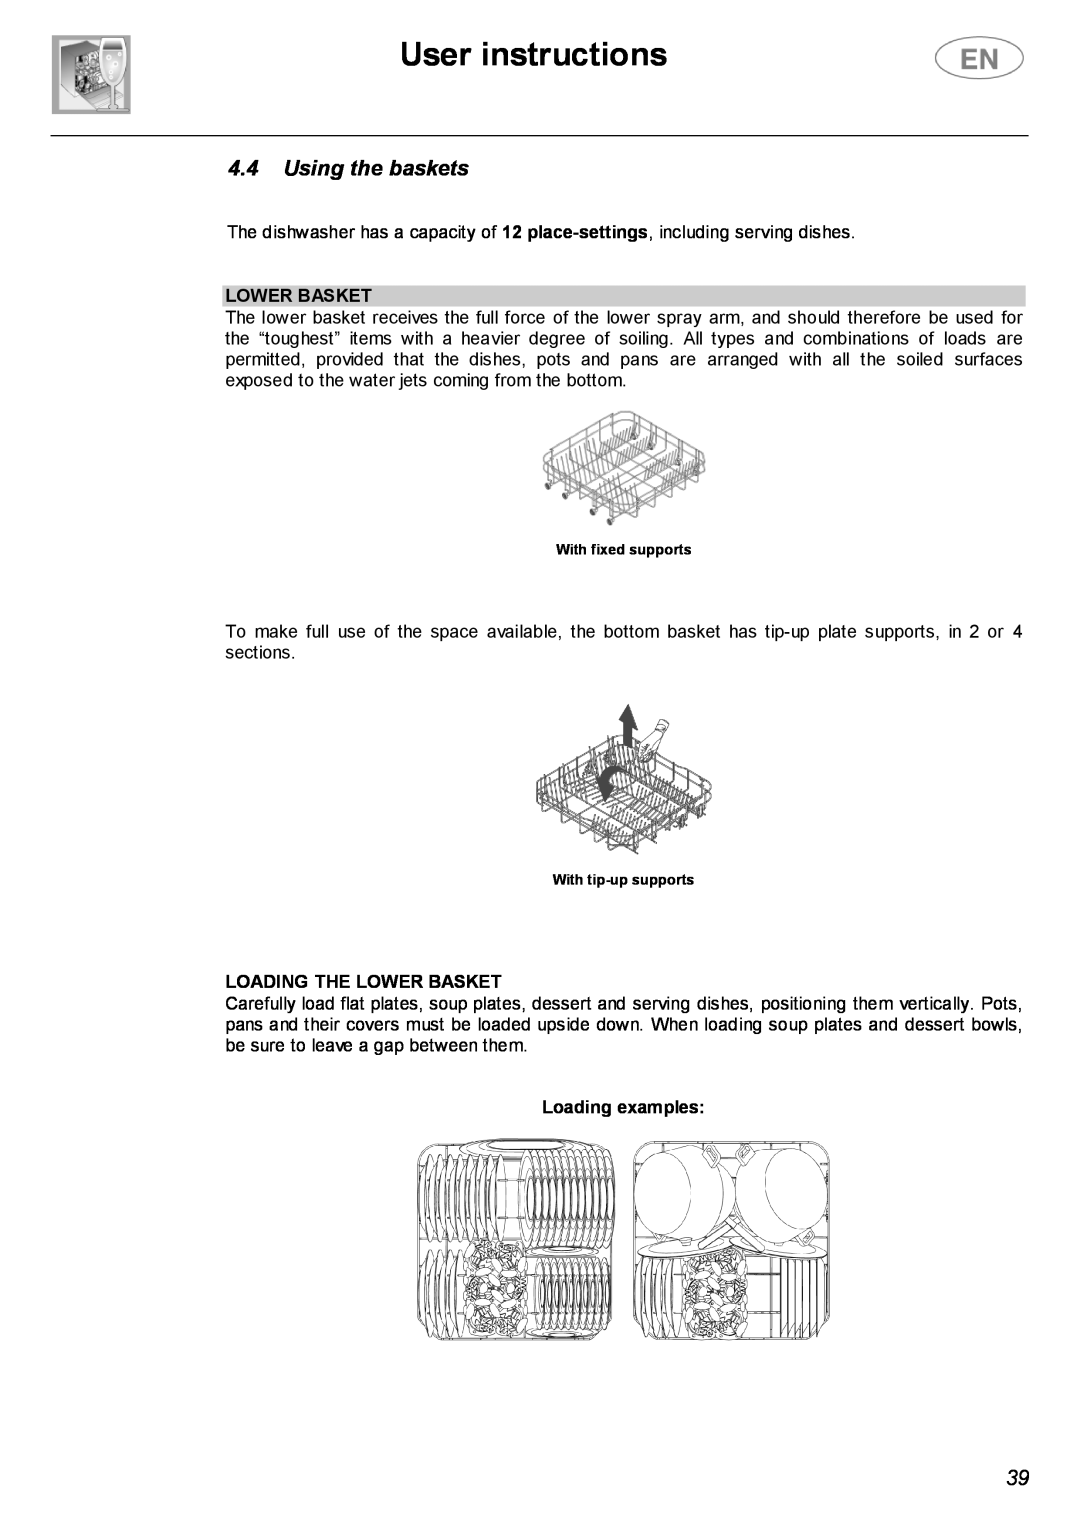 Smeg PL19K instruction manual Using the baskets, Loading The Lower Basket, Loading examples, User instructions 